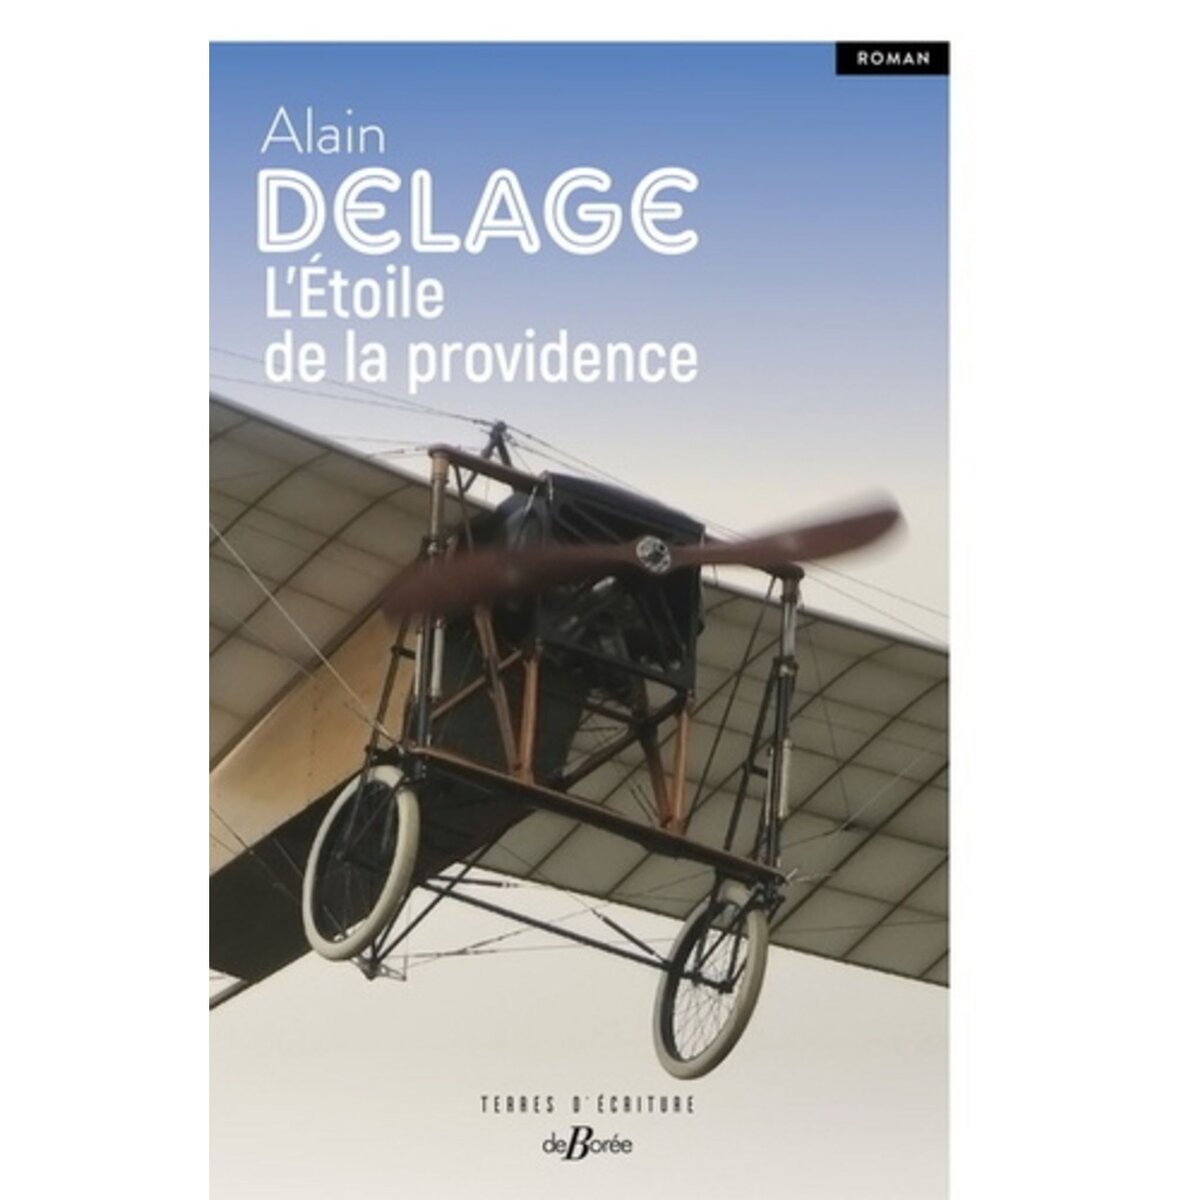  L'ETOILE DE LA PROVIDENCE, Delage Alain